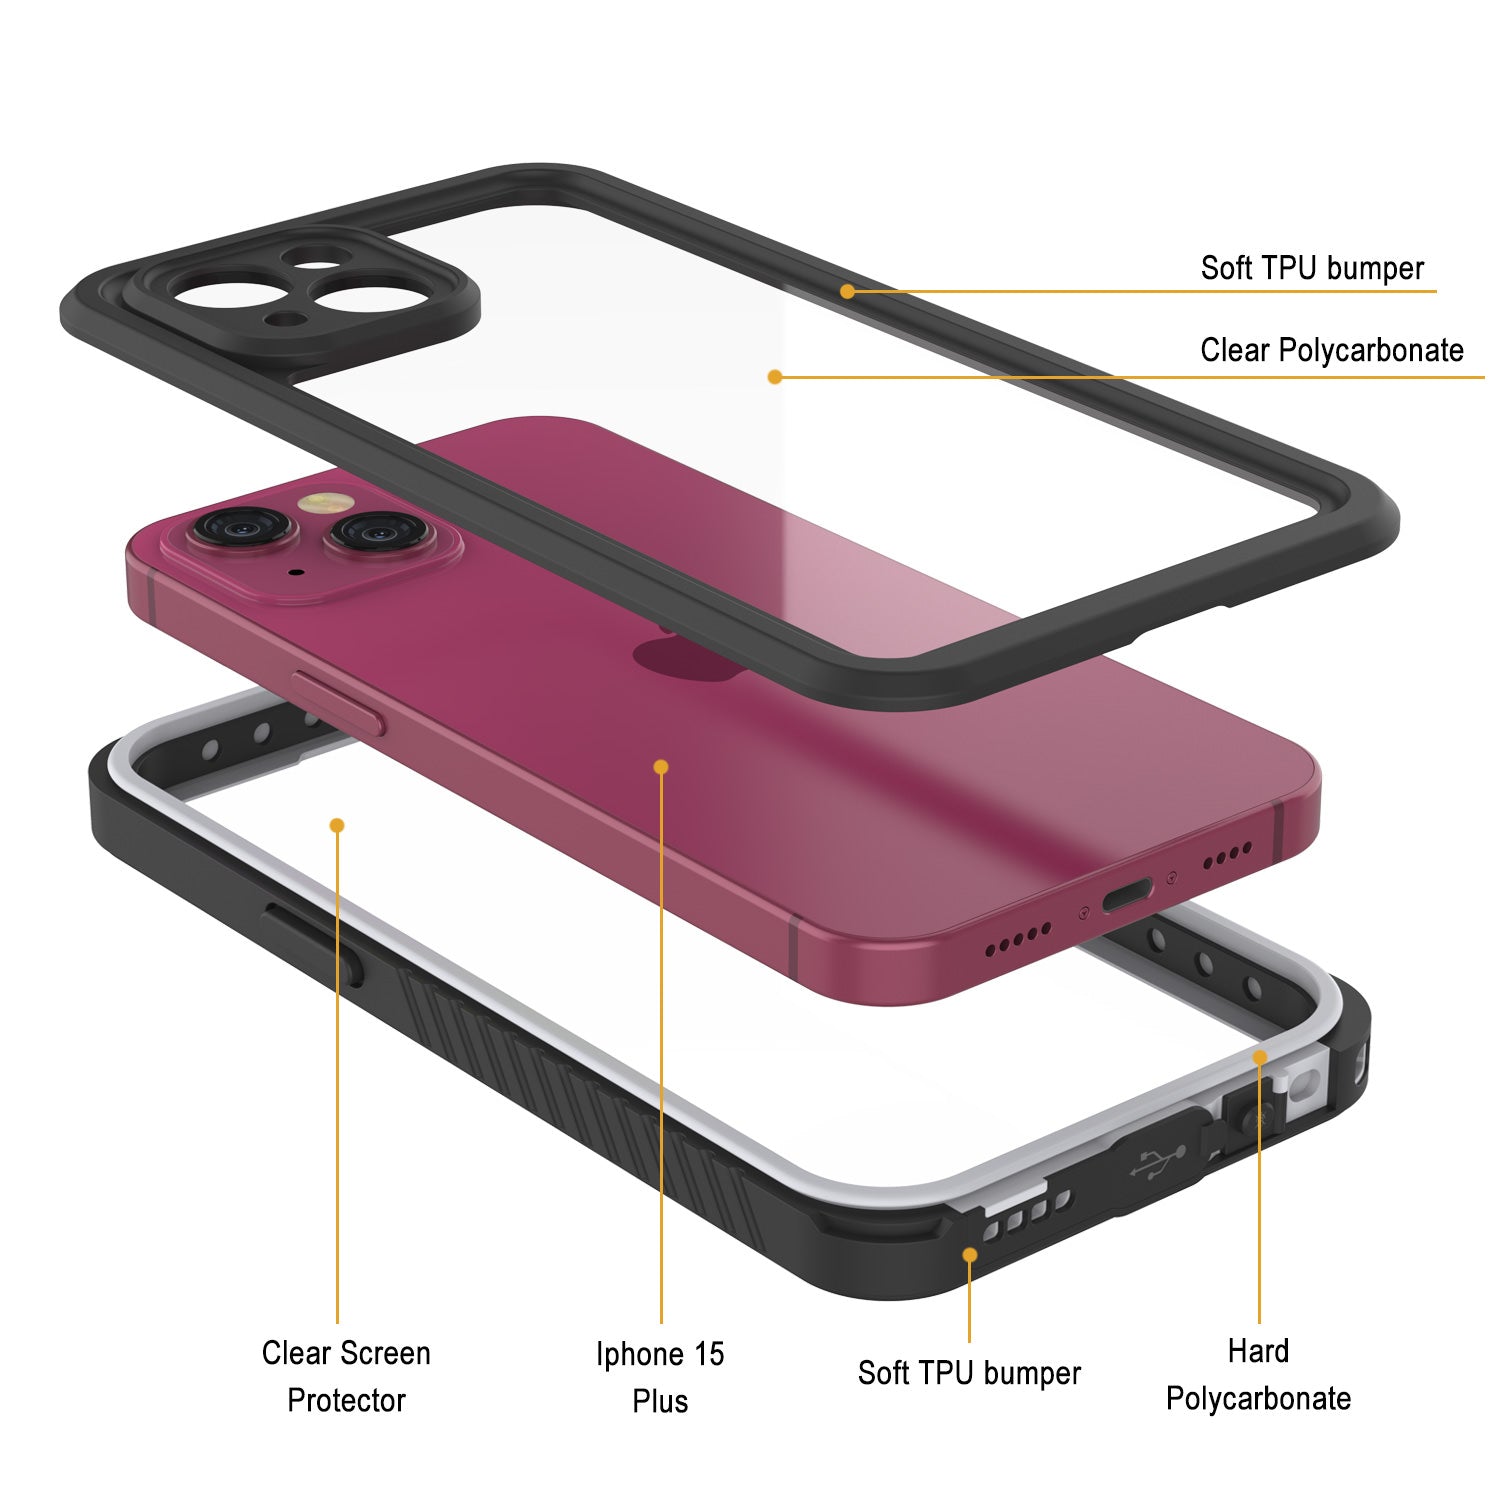 Punkcase iPhone 12 Mini Waterproof Case [Aqua Series] Armor Cover [Purple]